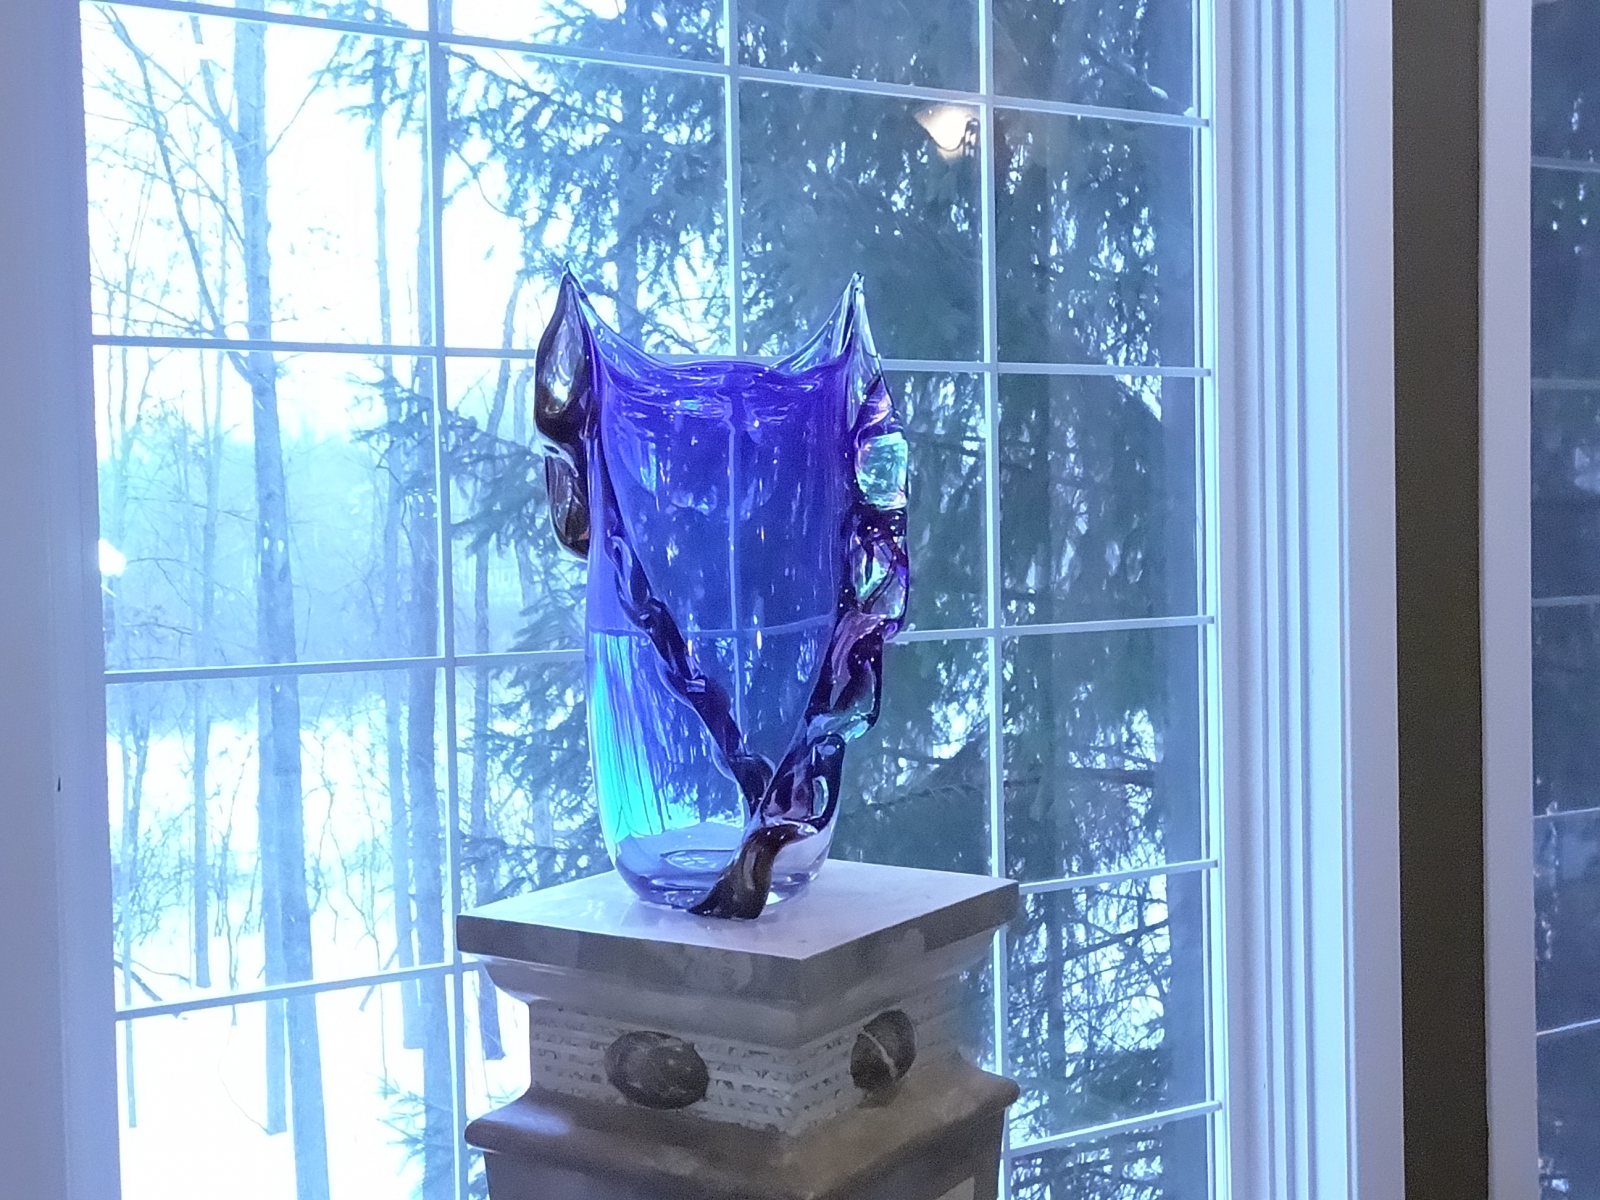 Magnificent Murano Glass Vase Blue